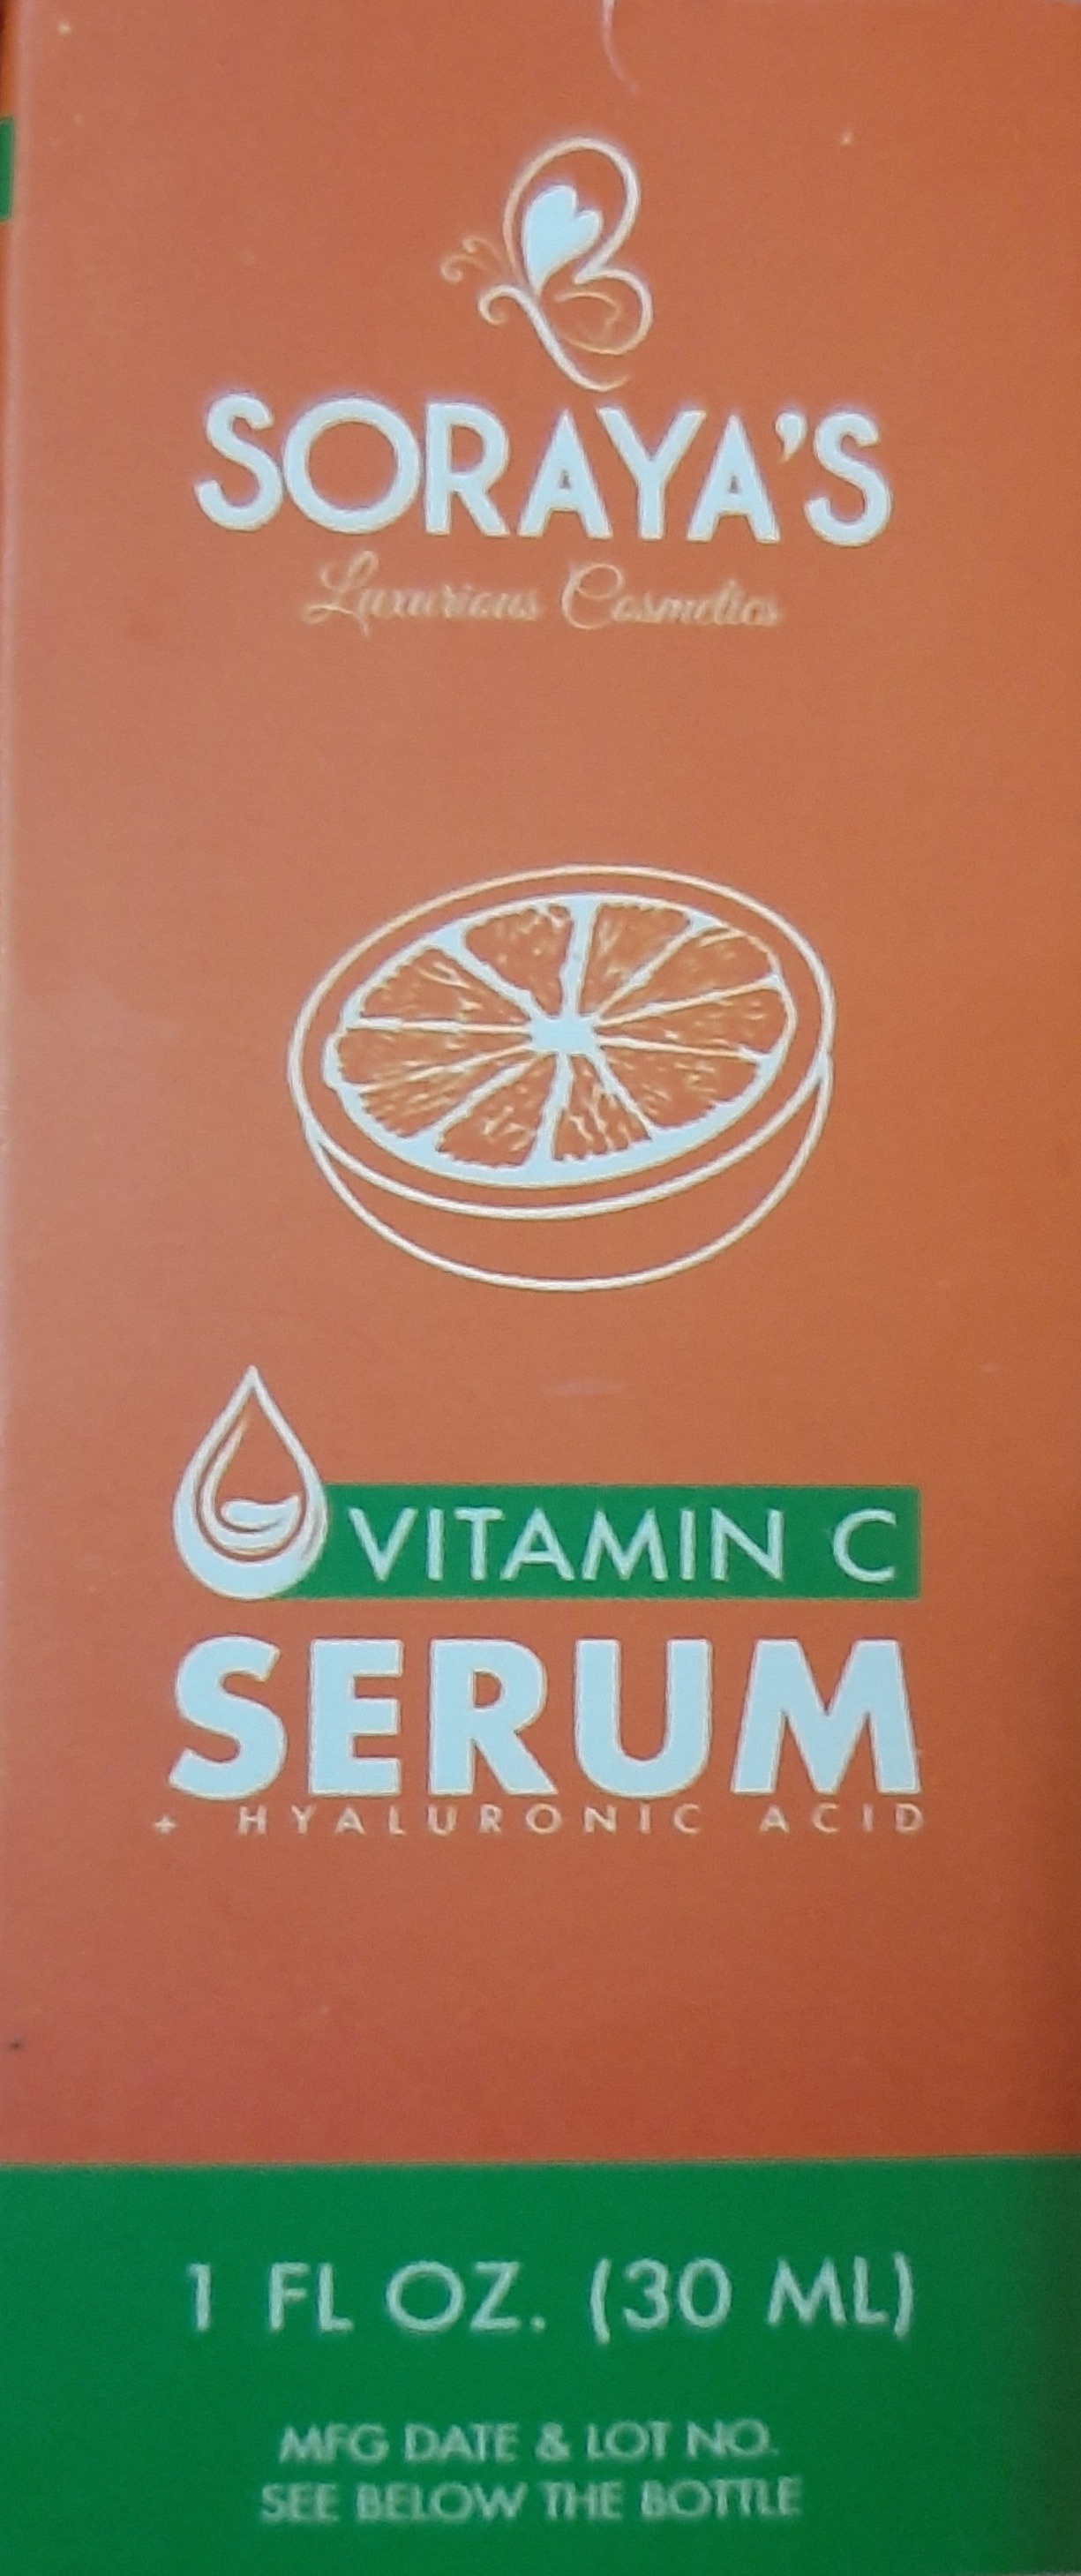 Soraya's Vitamin c serum